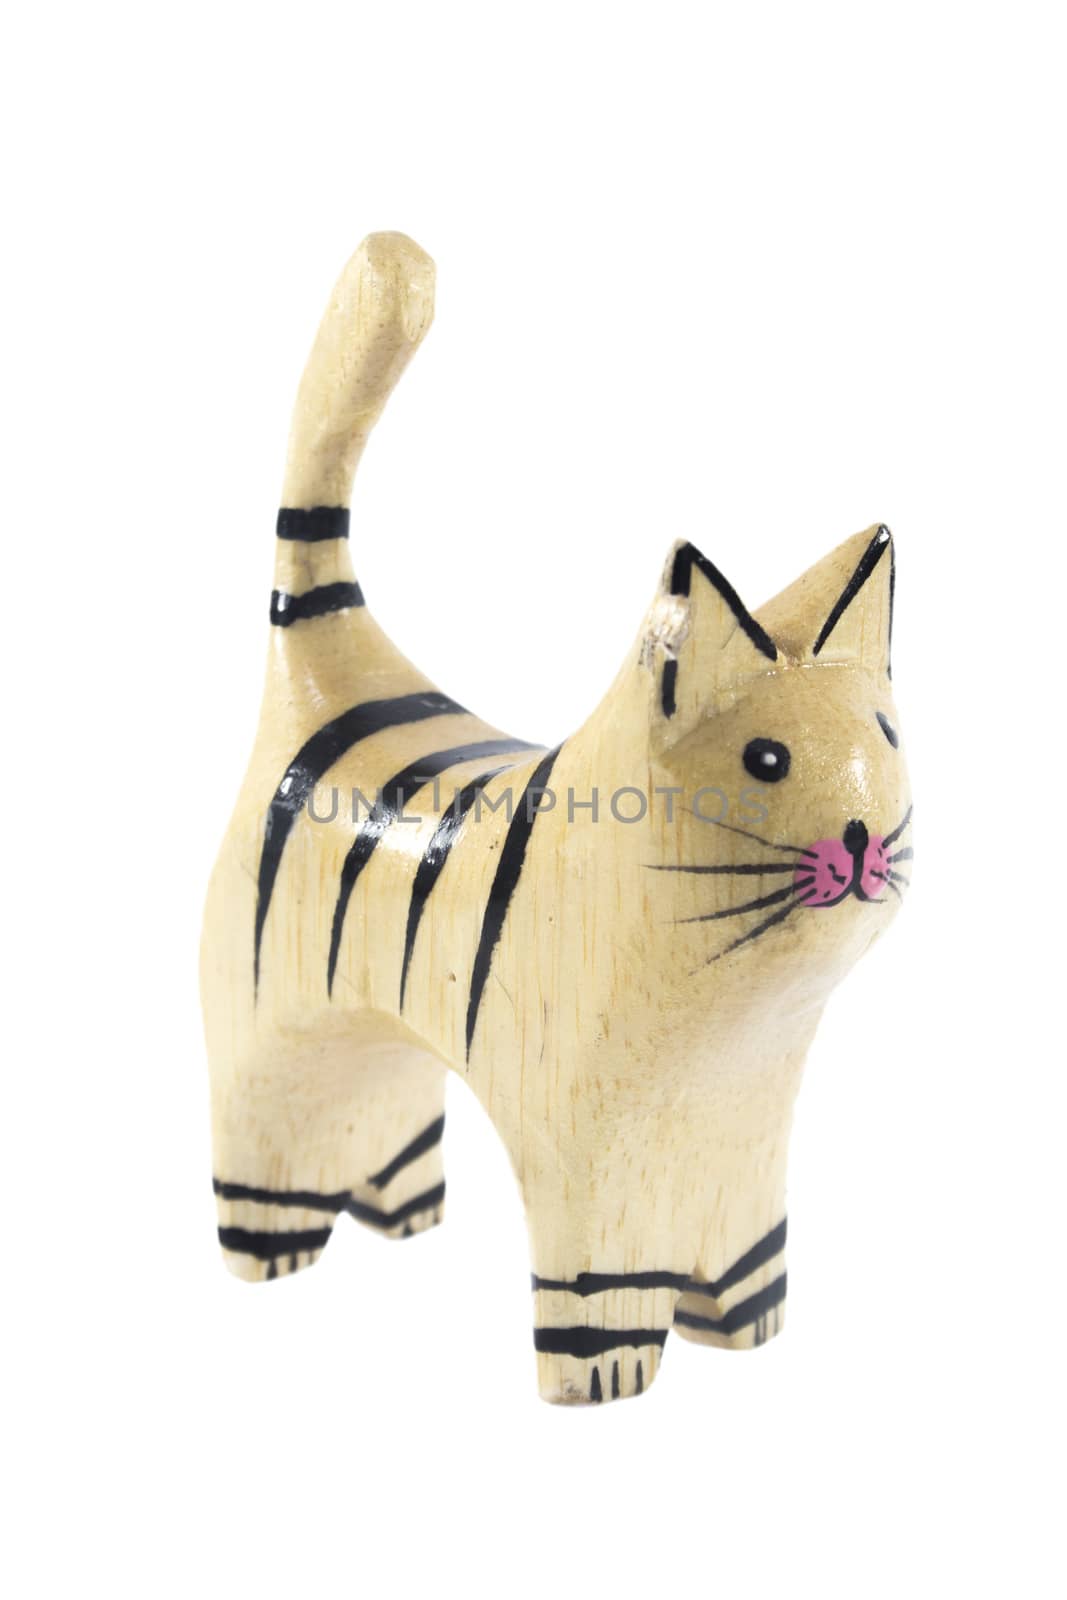 Cat figurine made of wood